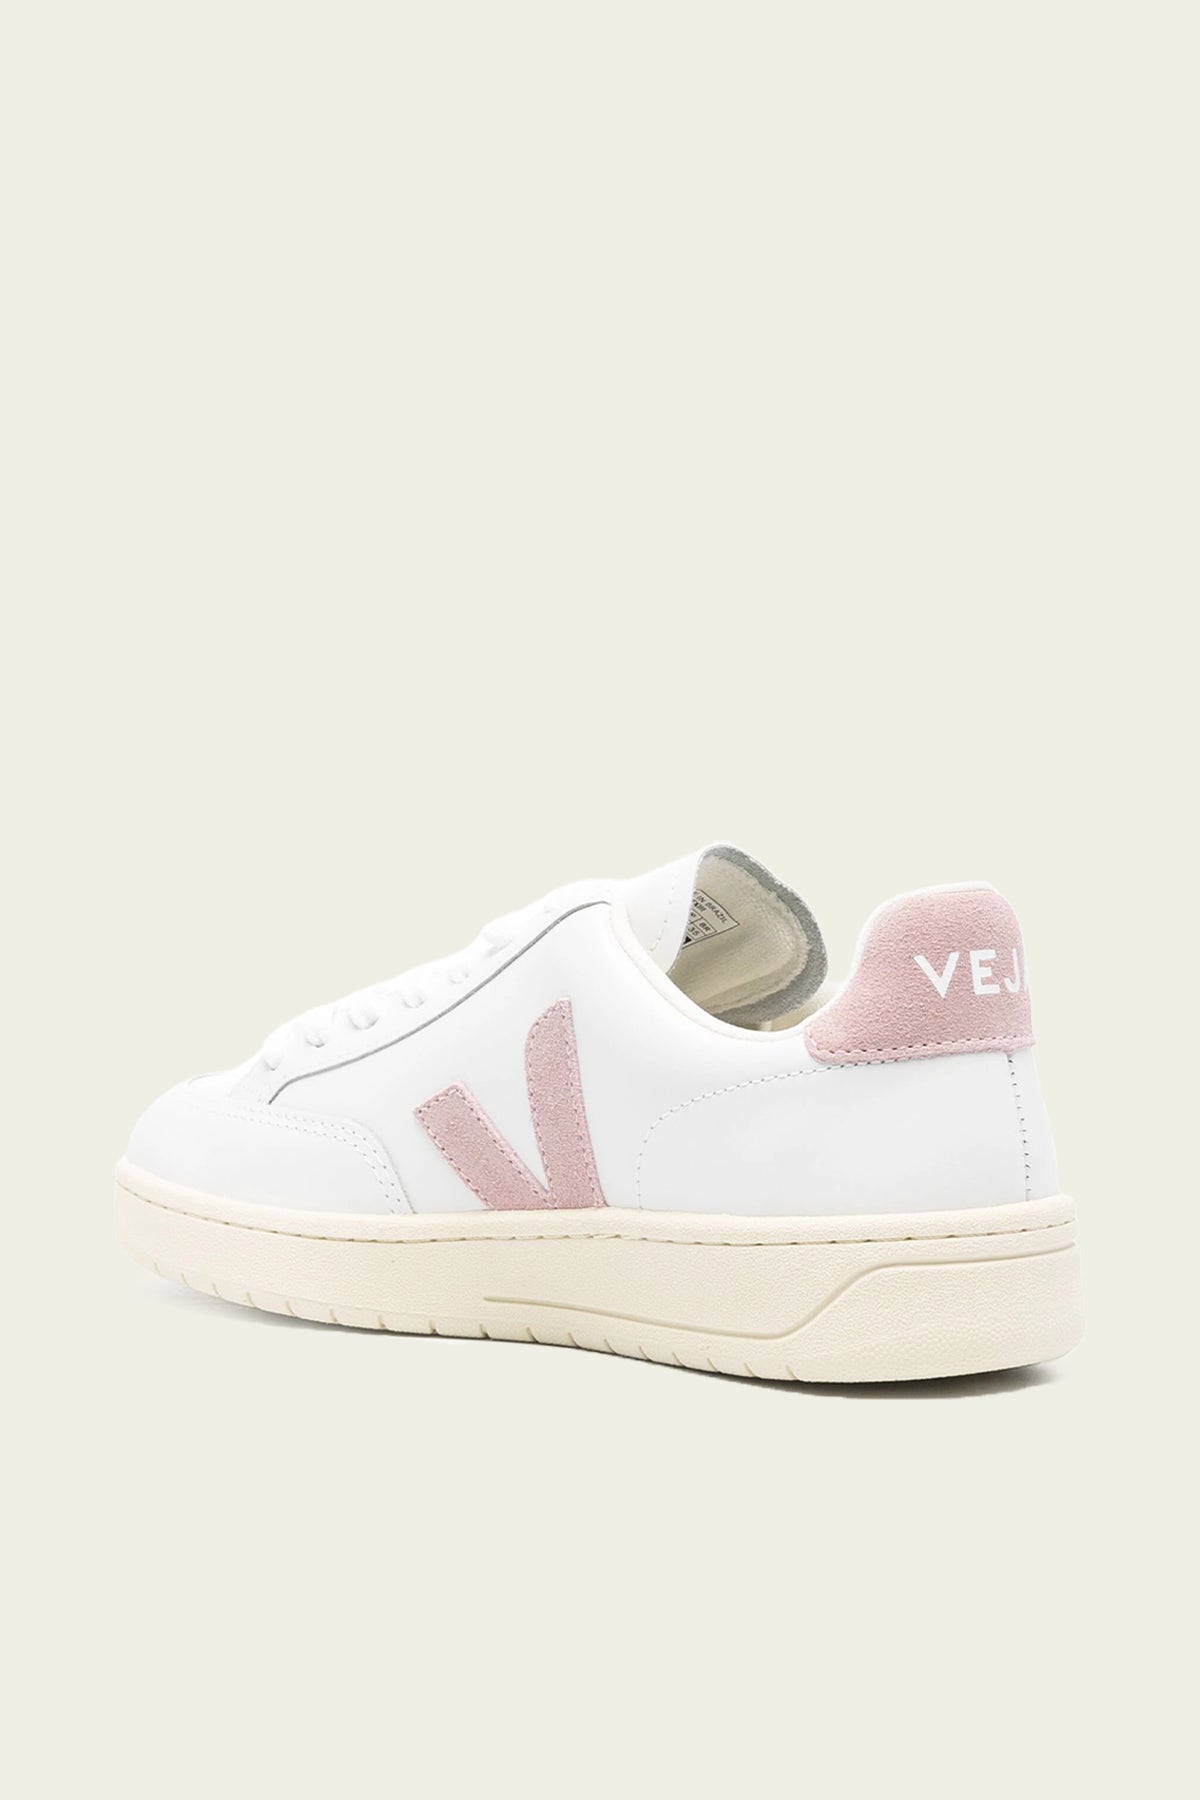 V-12 Leather Sneaker in White Babe - shop-olivia.com